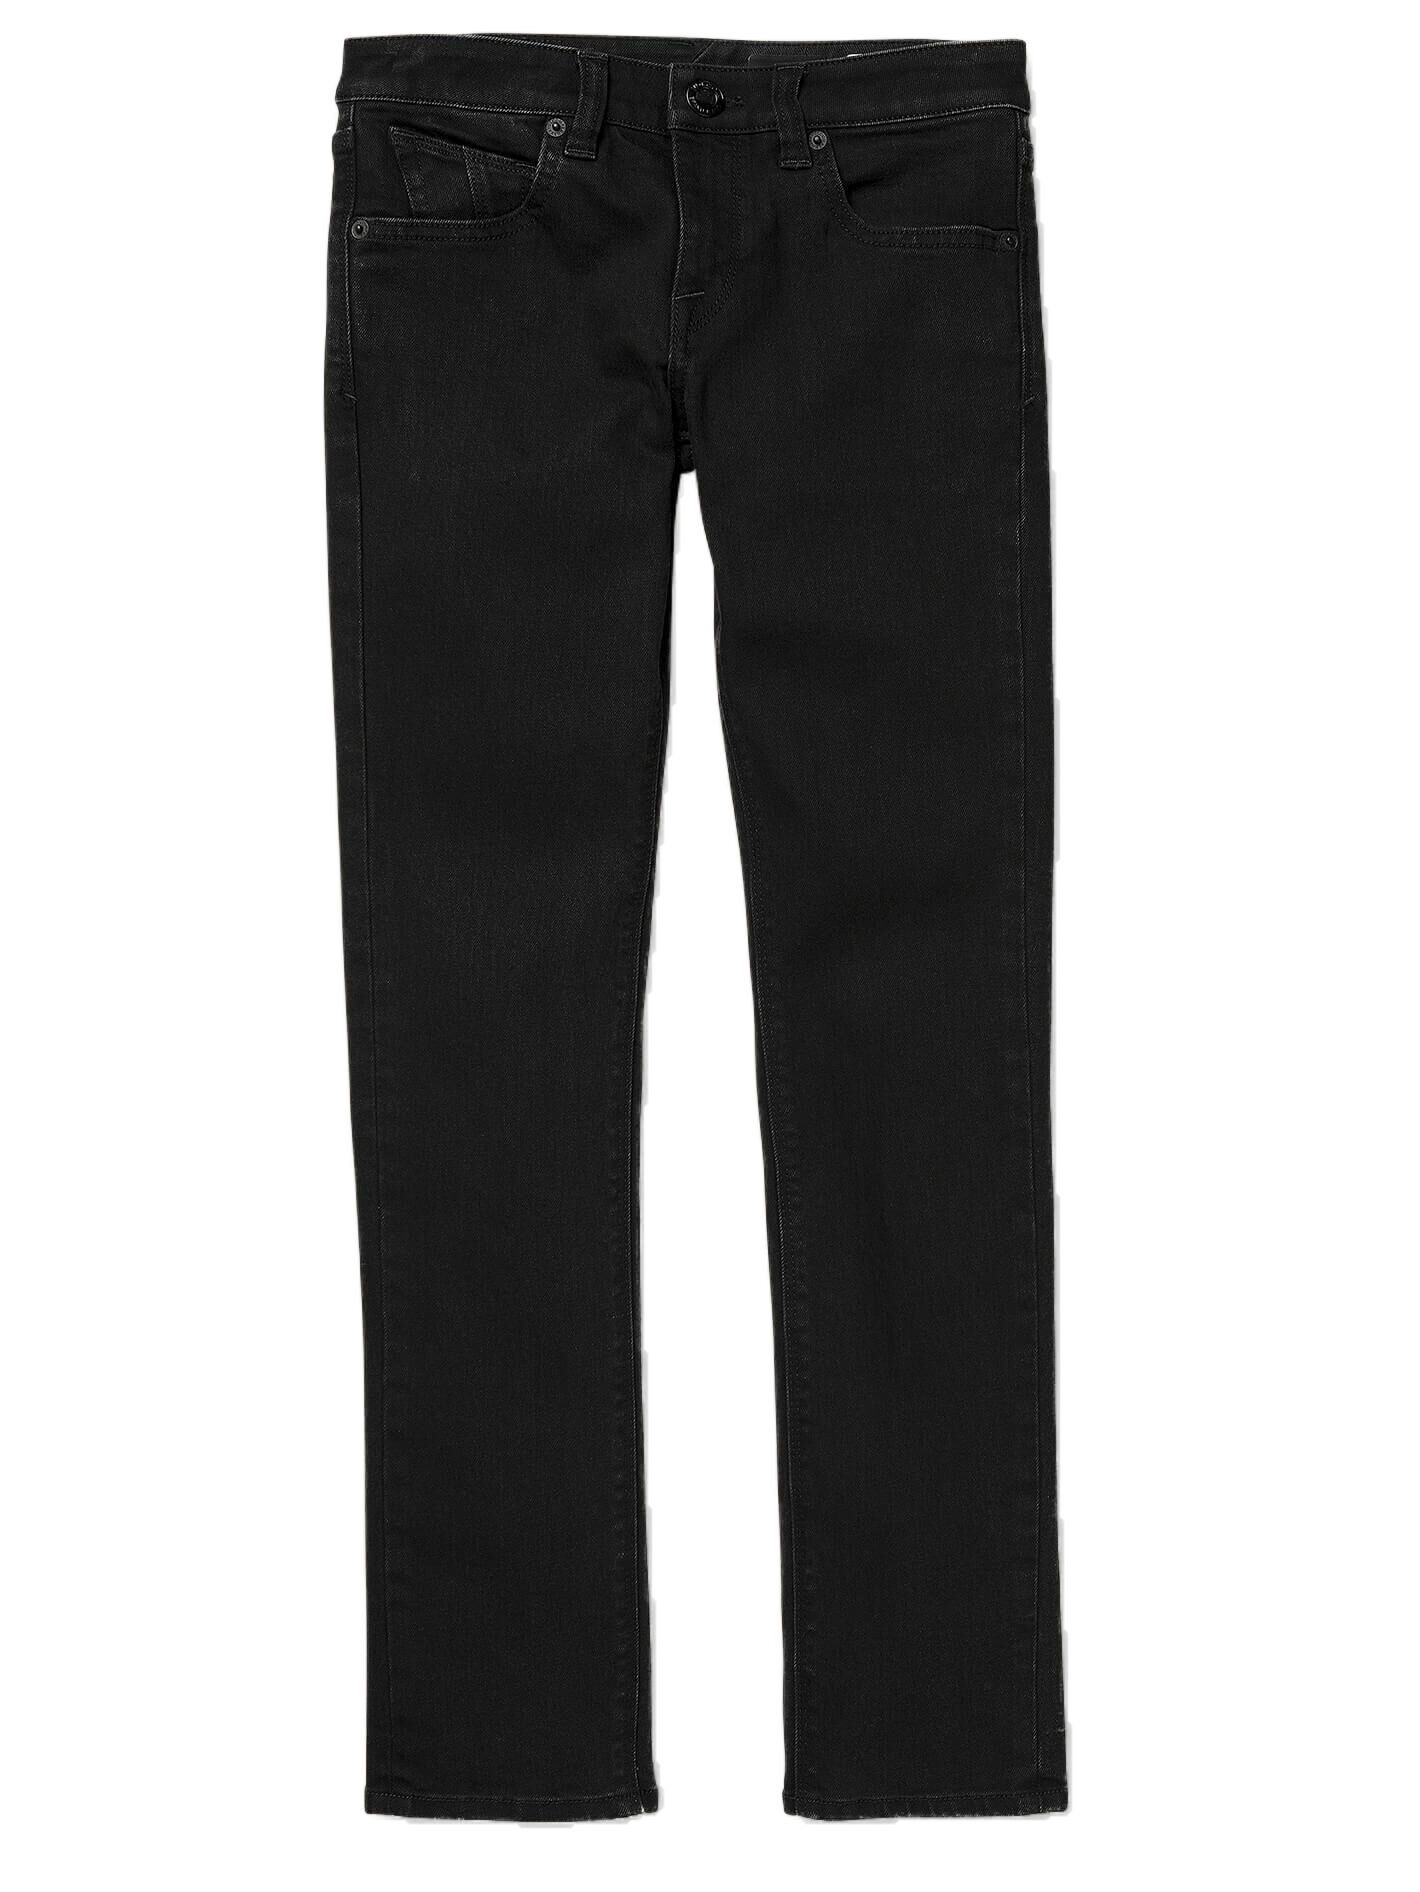 Volcom 2X4 Skinny Fit Jeans - Boys Pants | Rockies NZ - Volcom 09342078 W20